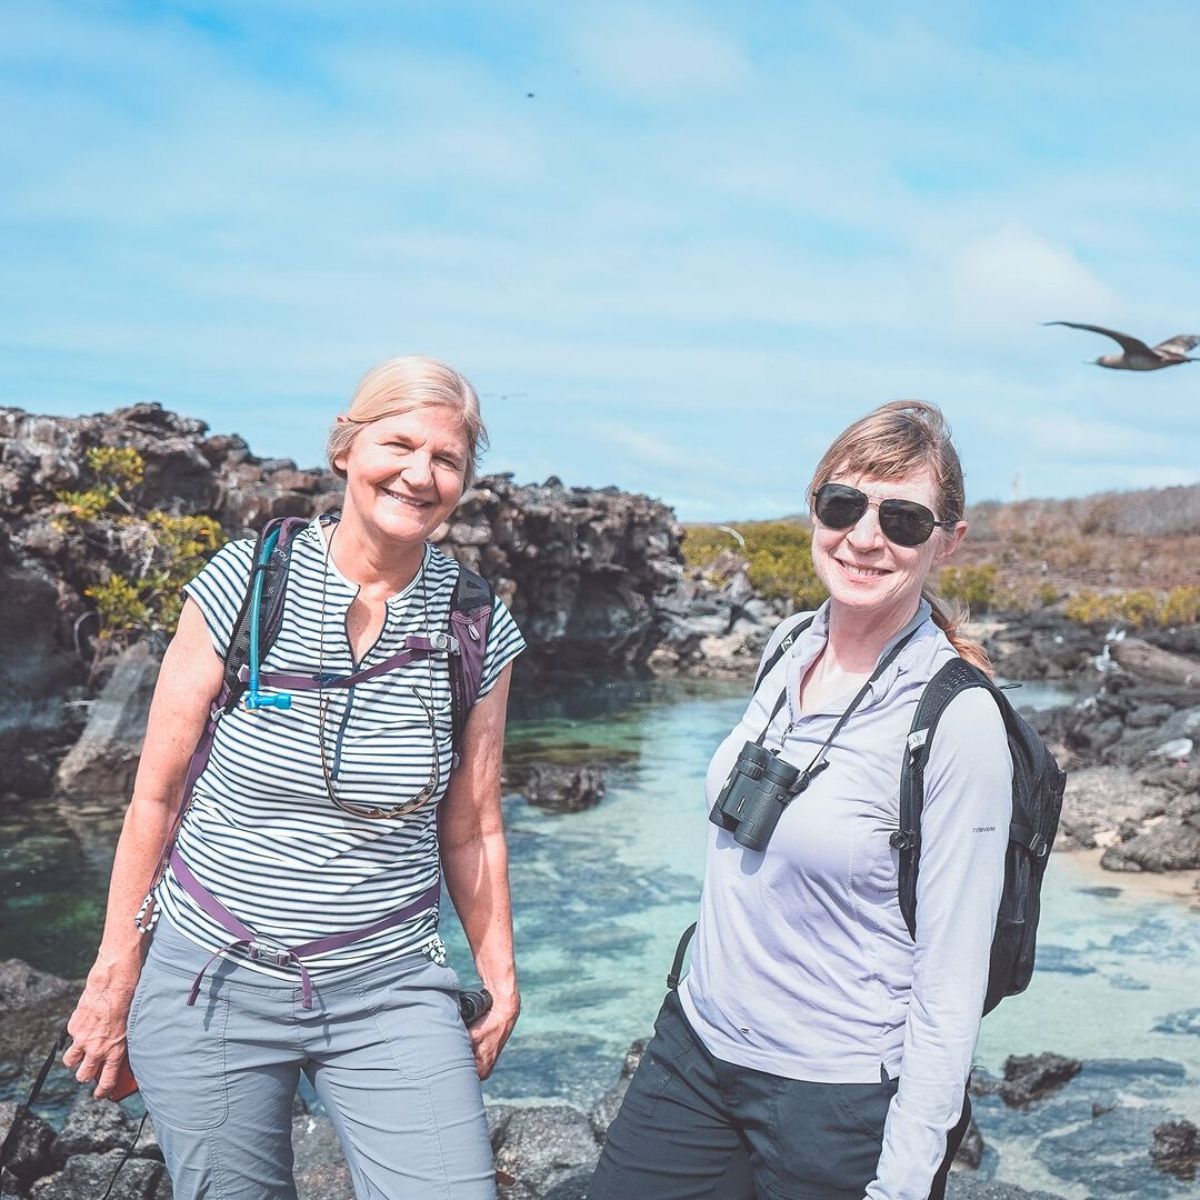 Tourism in Galapagos Islands